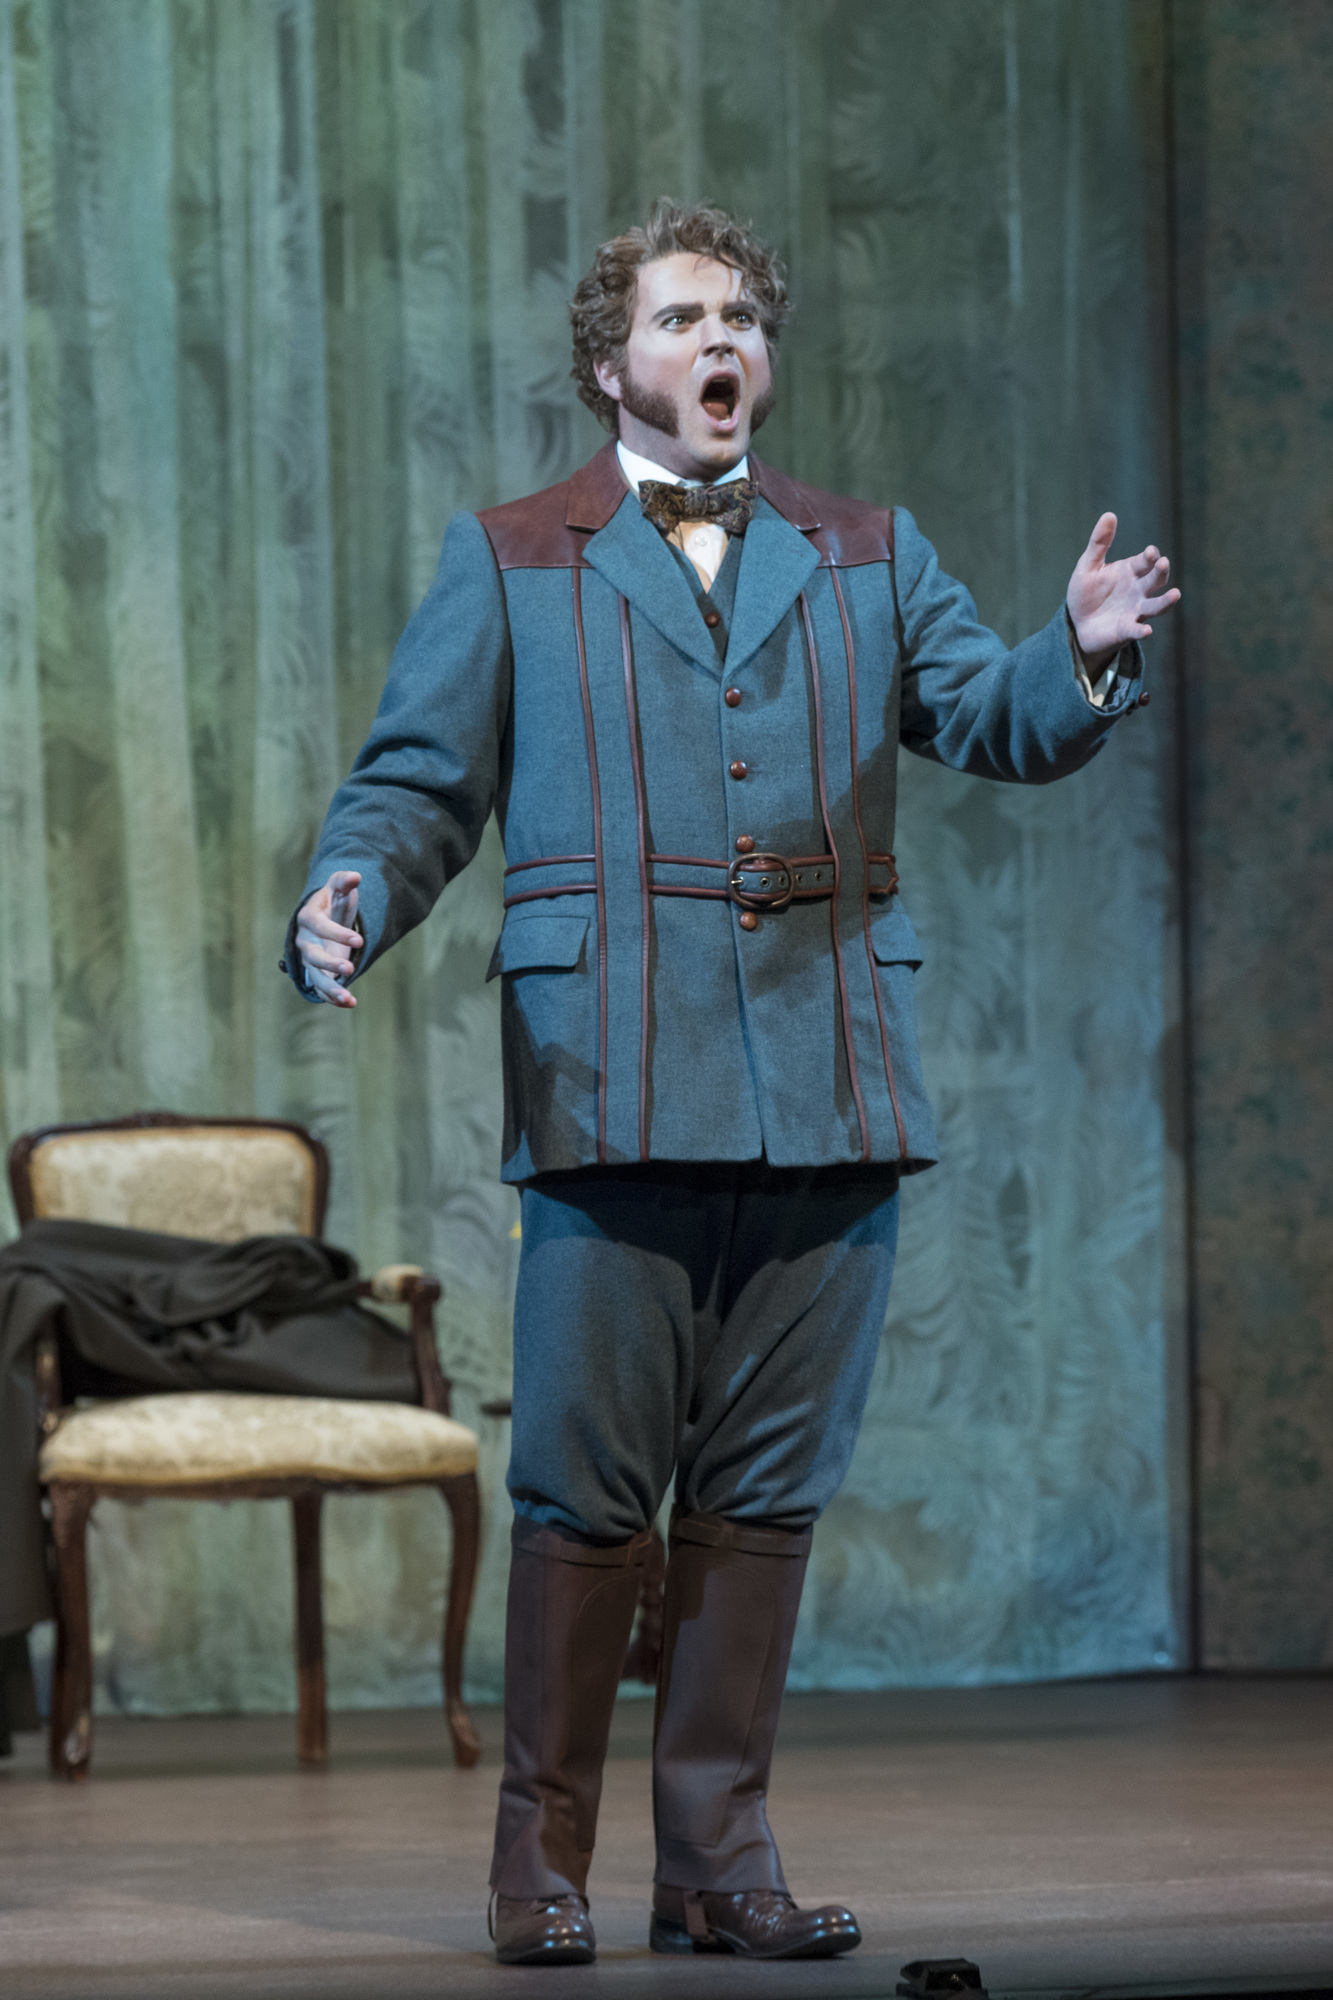 Andrew Surrena makes his principal artist debut as Alfredo Germont in Verdi’s 